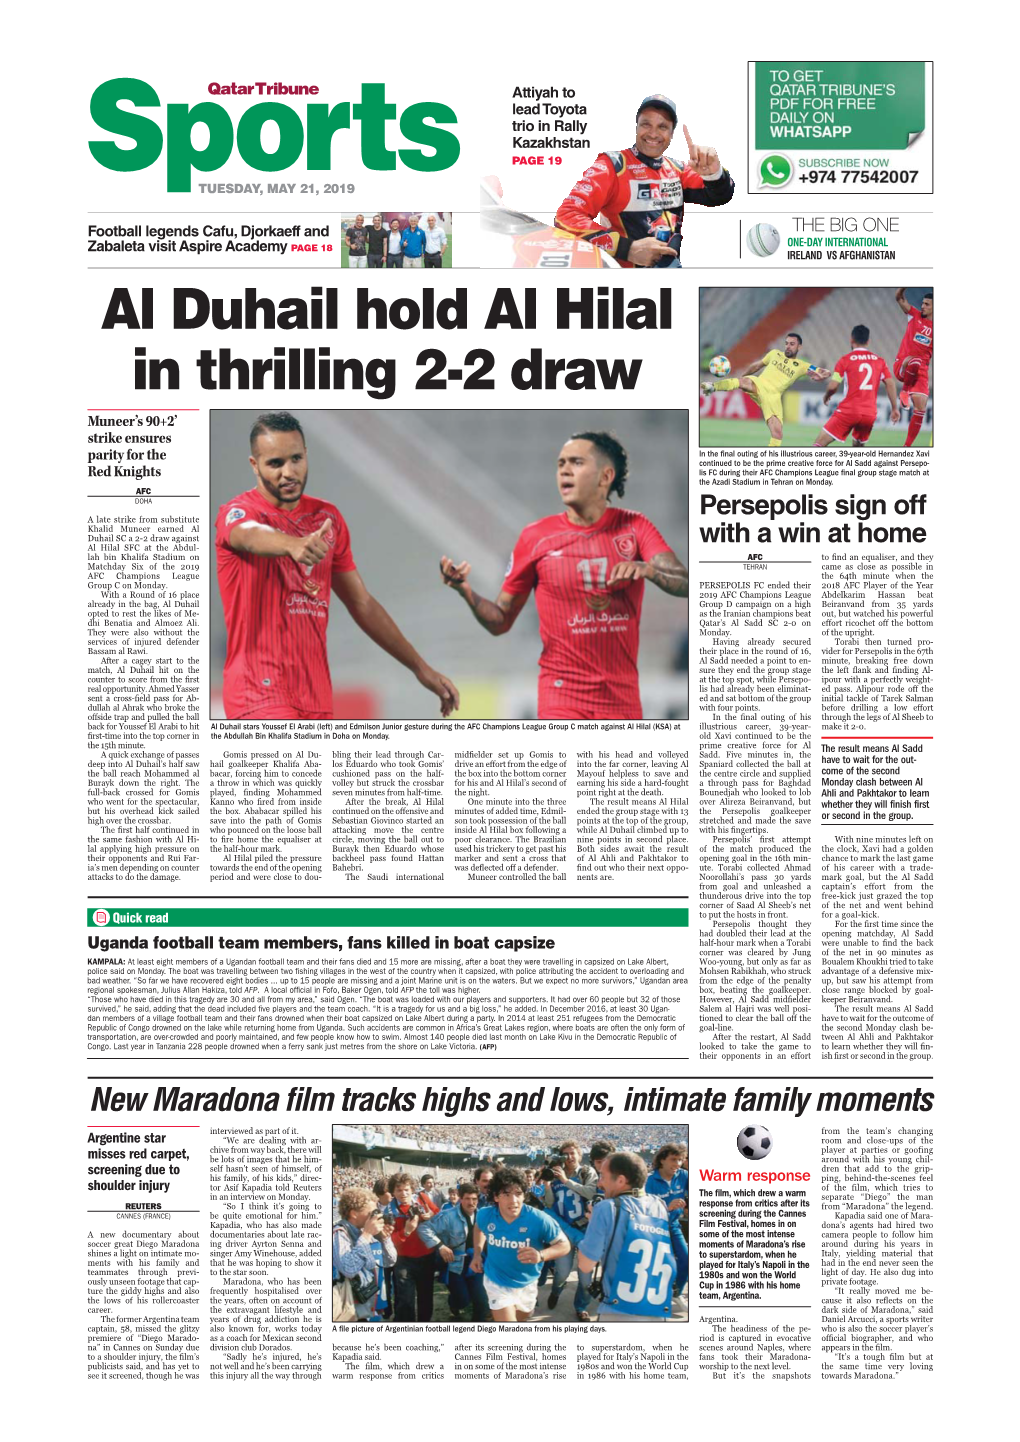 Al Duhail Hold Al Hilal in Thrilling 2-2 Draw